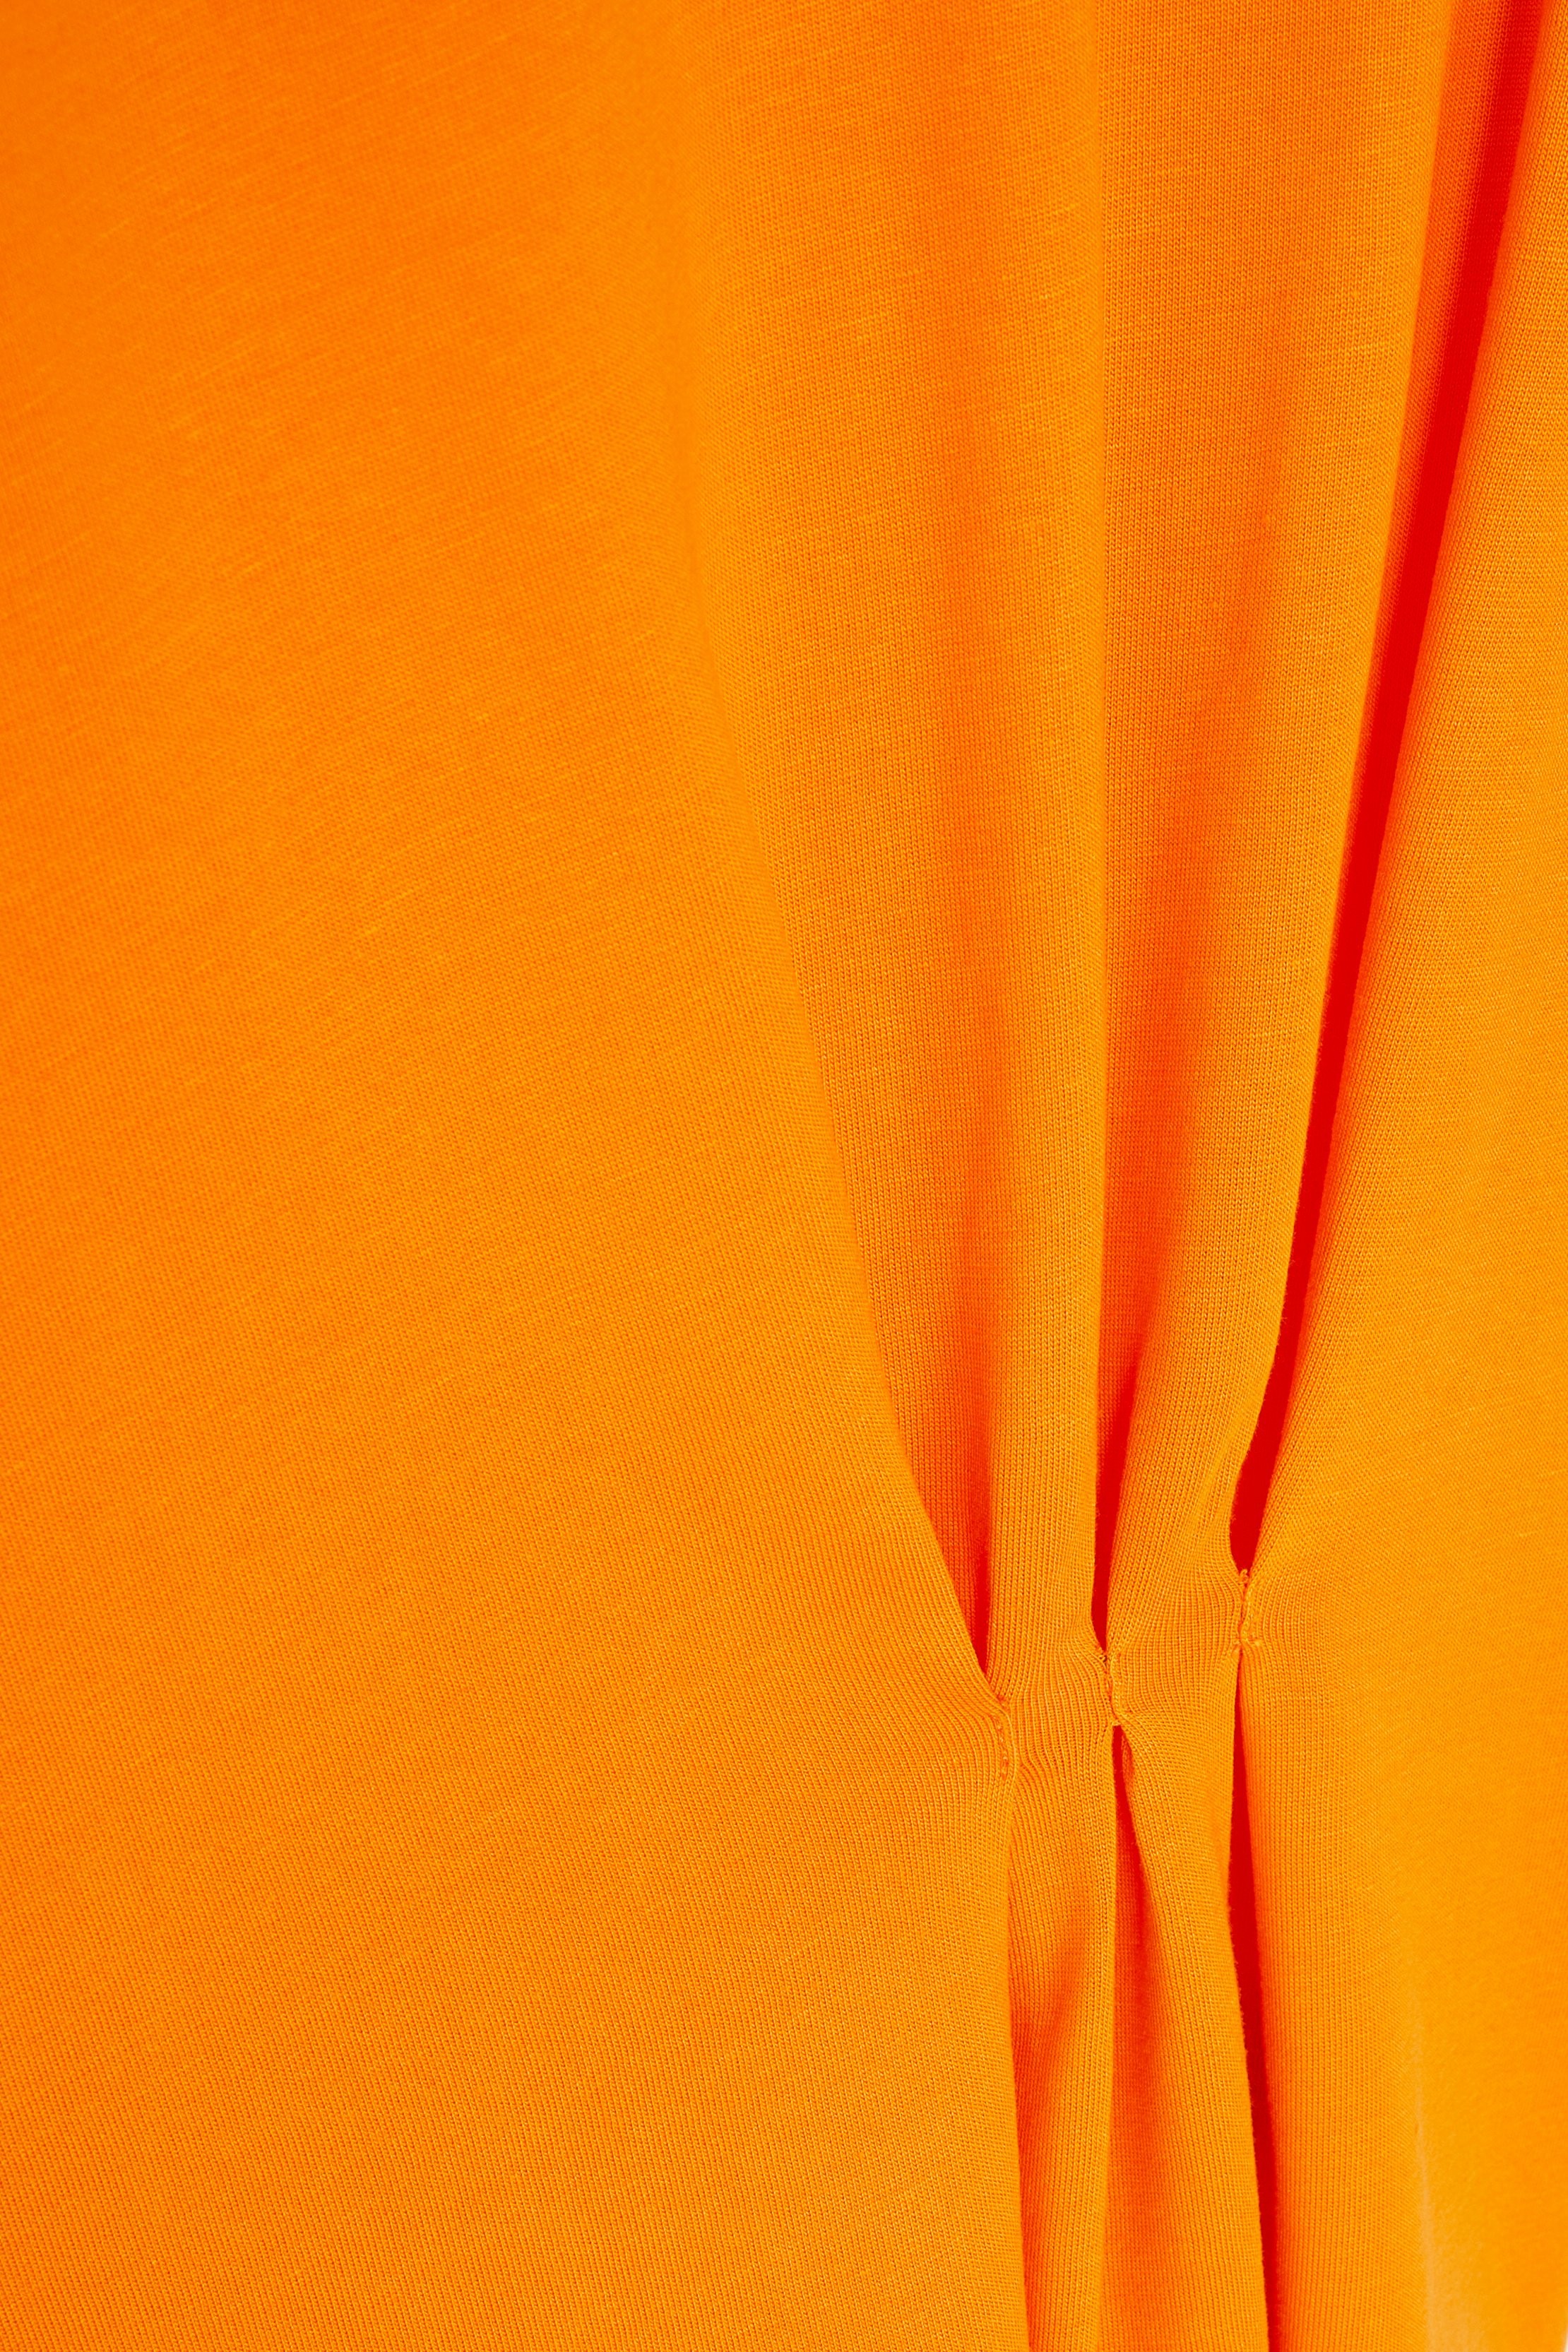 CKS Dames - TWIST - t-shirt korte mouwen - intens oranje